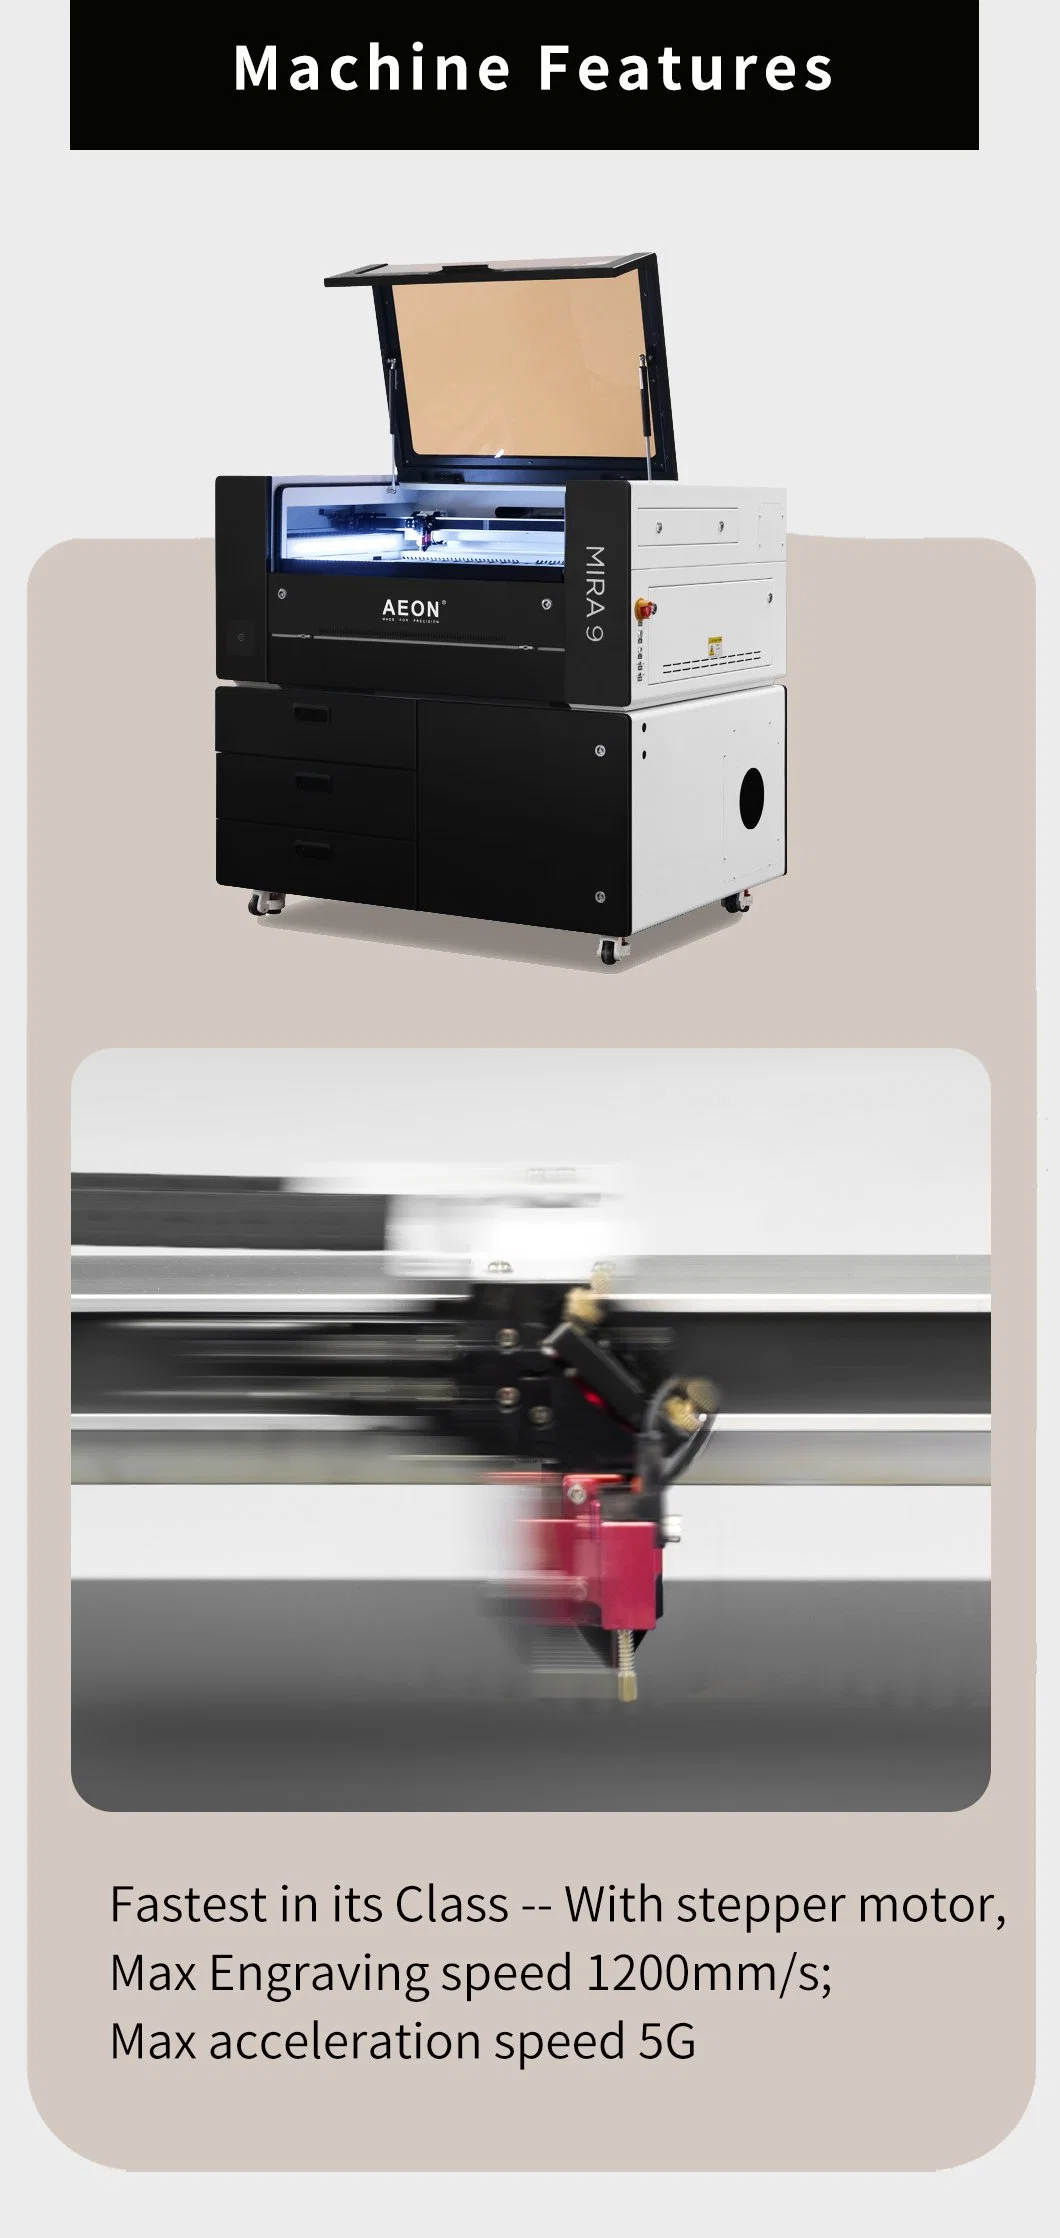 60W/80W/100W/RF30W/RF50W CNC Laser for Nonmetal Cutting Mira9